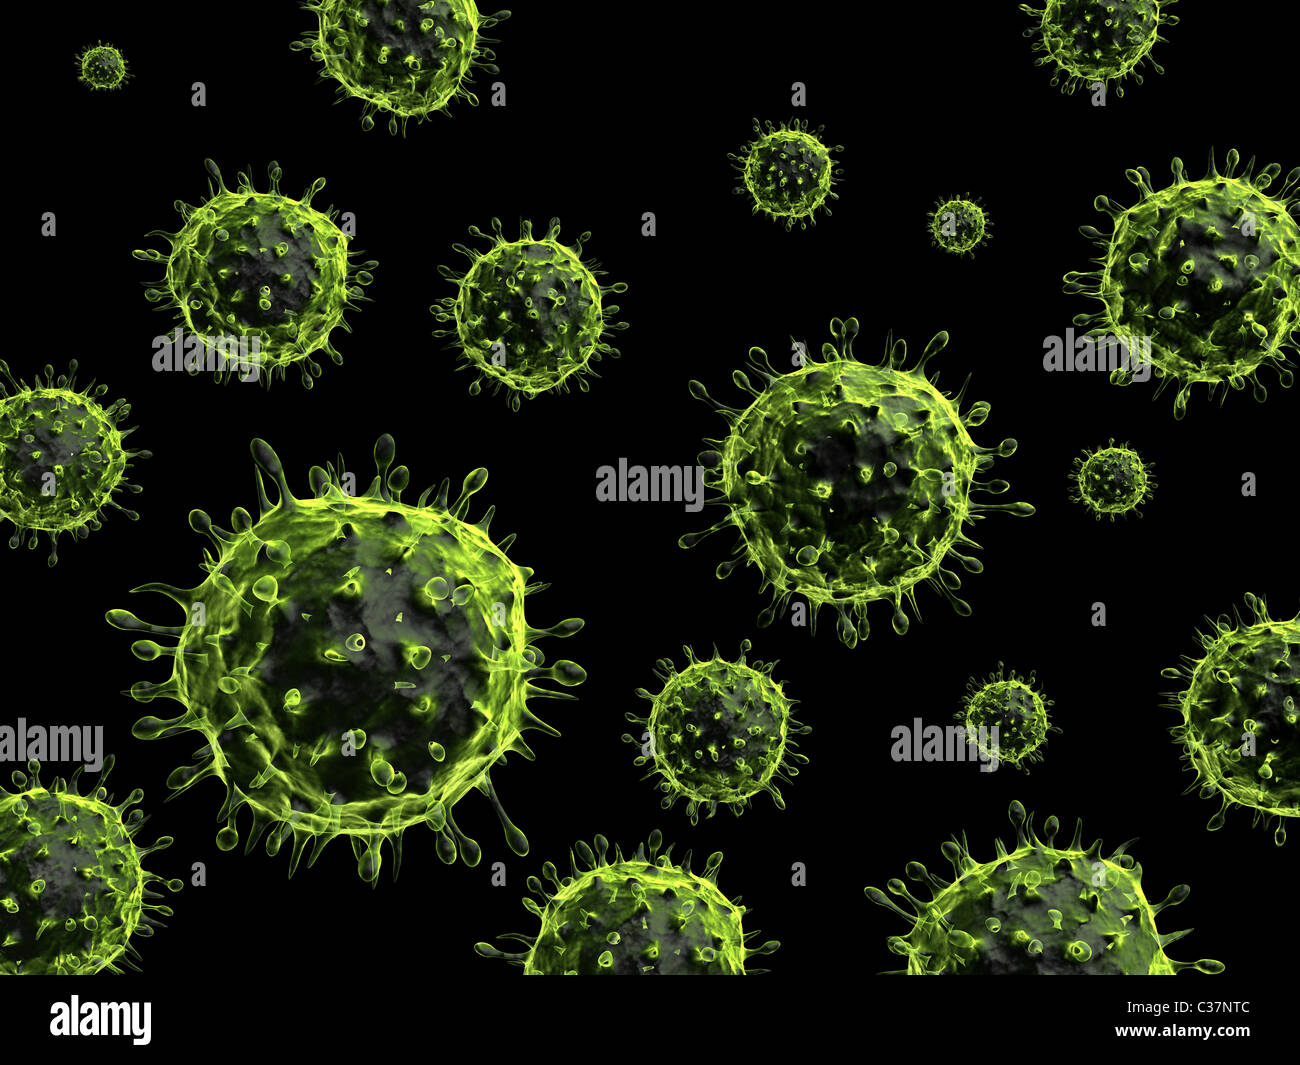 h1n1 virus Stock Photo